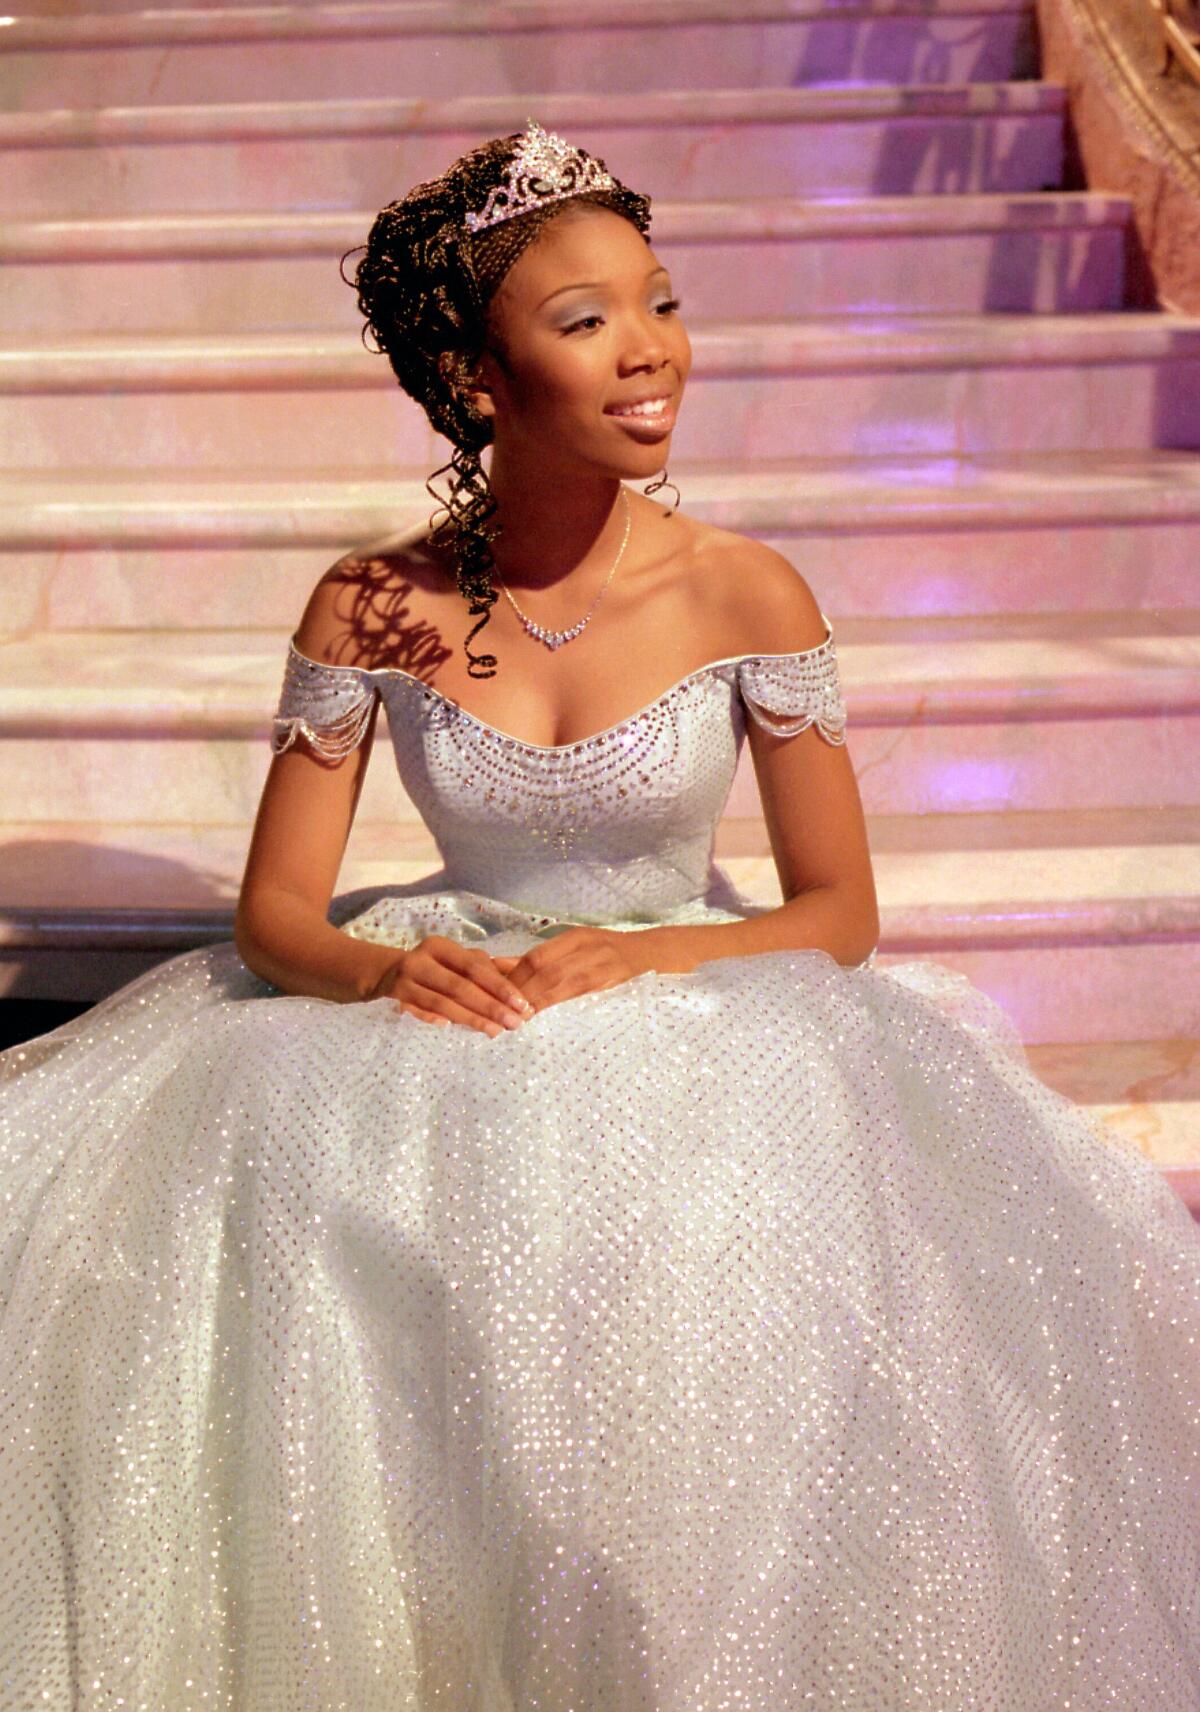 Brandy Norwood became Disney's first Black princess in "Cinderella."